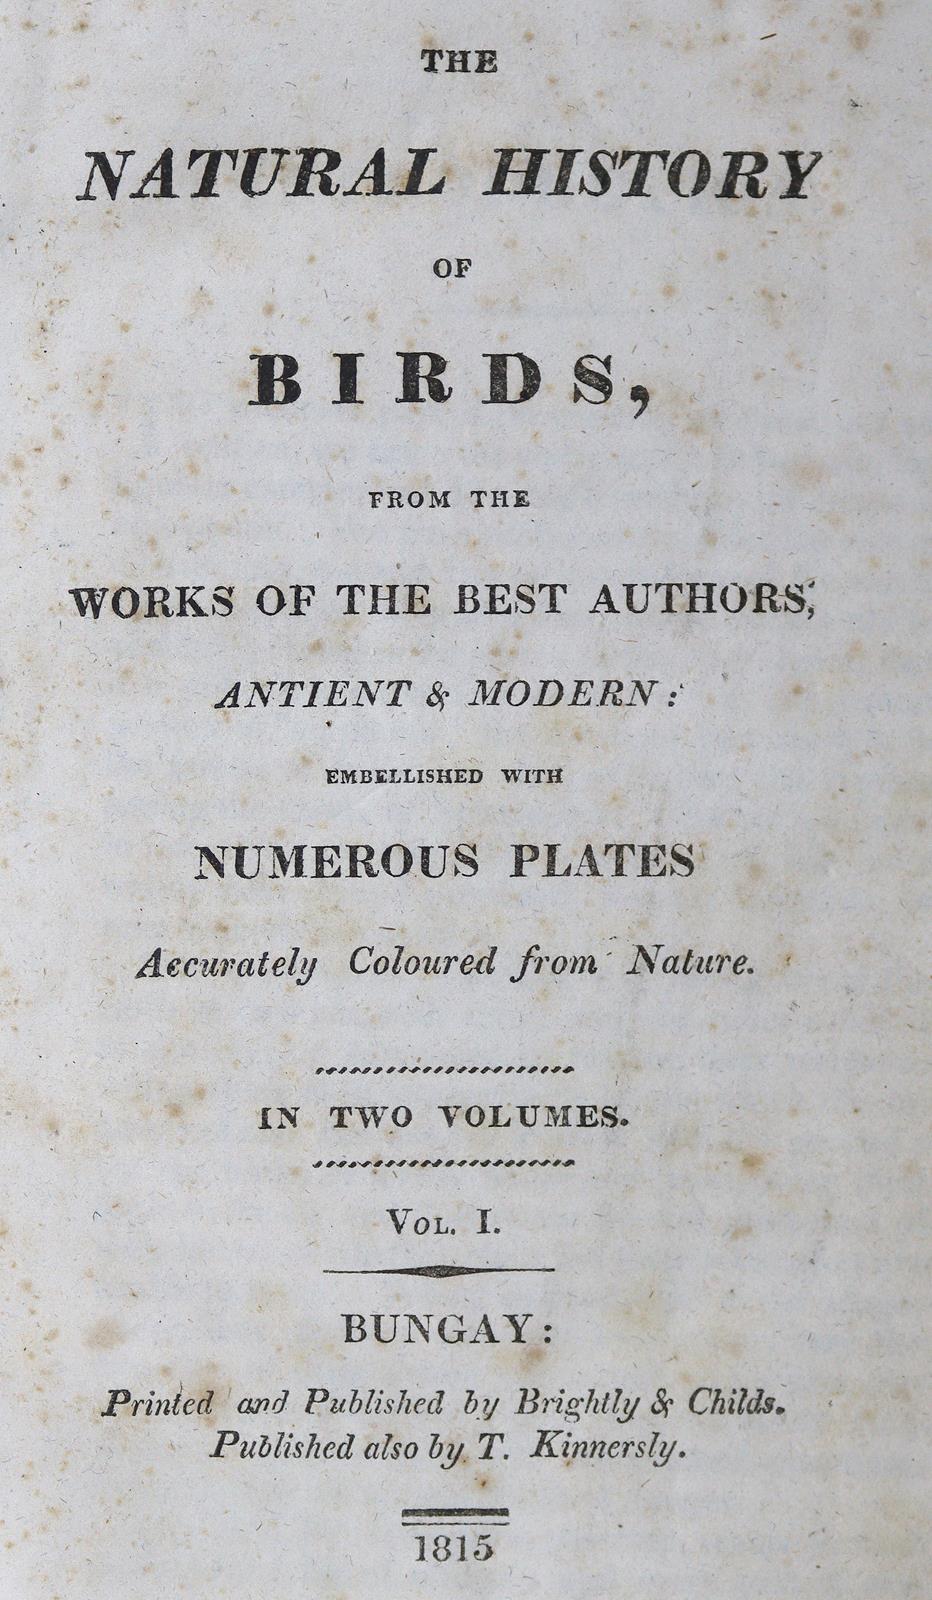 Natural History of Birds, The. | Bild Nr.1